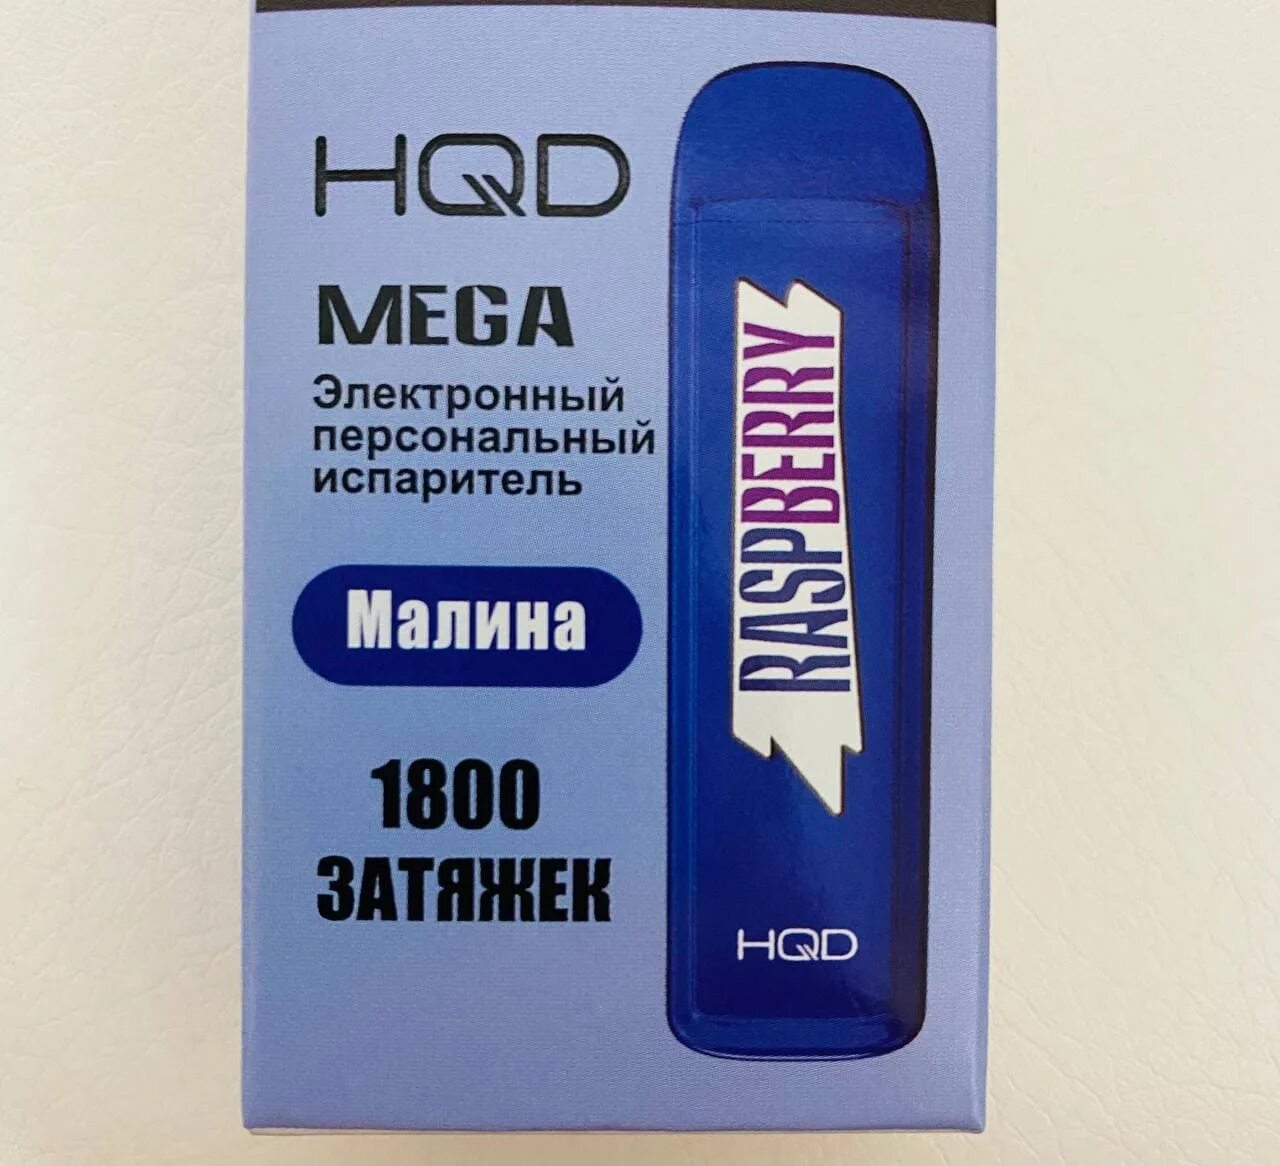 Hqd купить в москве. Электронный испаритель HQD. Одноразка Mega. HQD Mega малина. HQD мега.